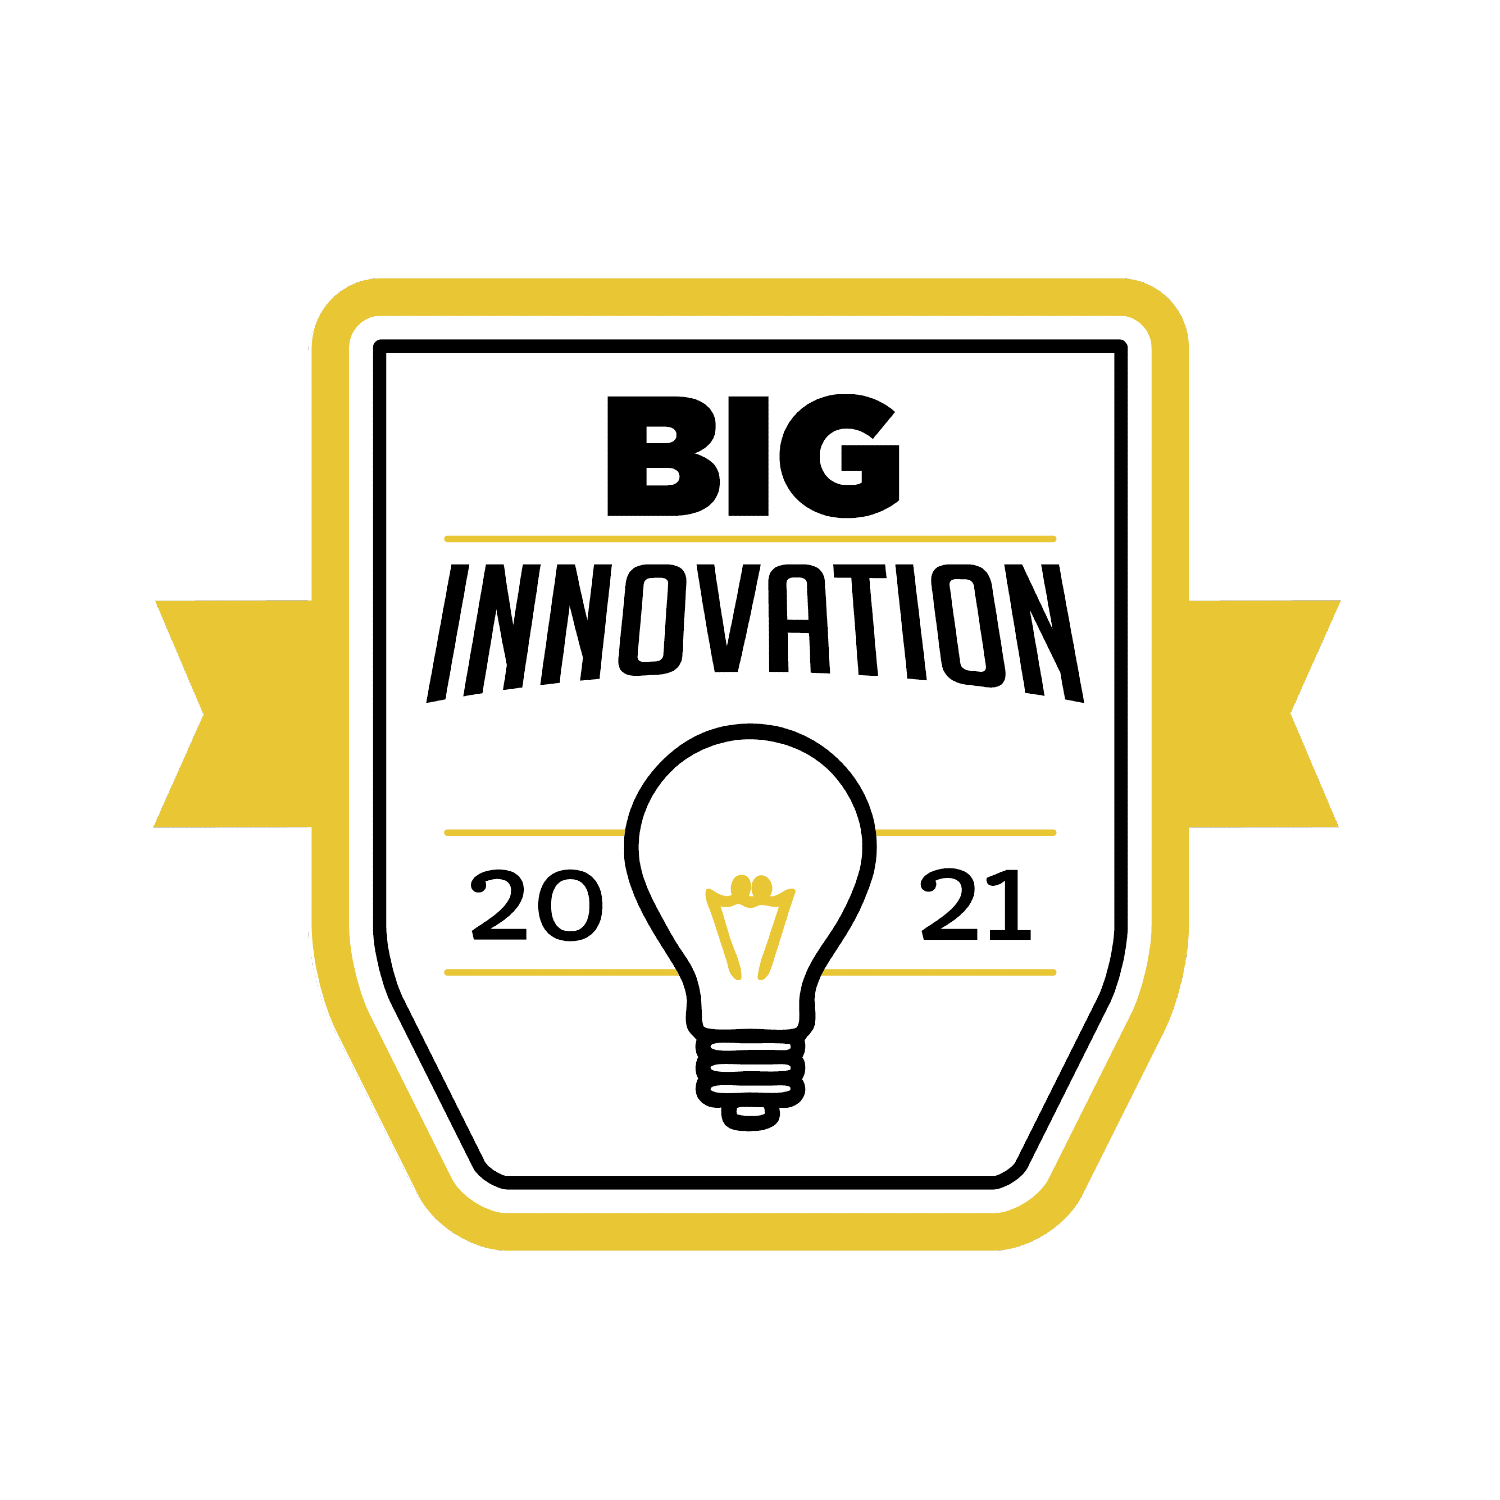 7 Executives, 52 Companies and 137 Products Win 2021 BIG Innovation Award